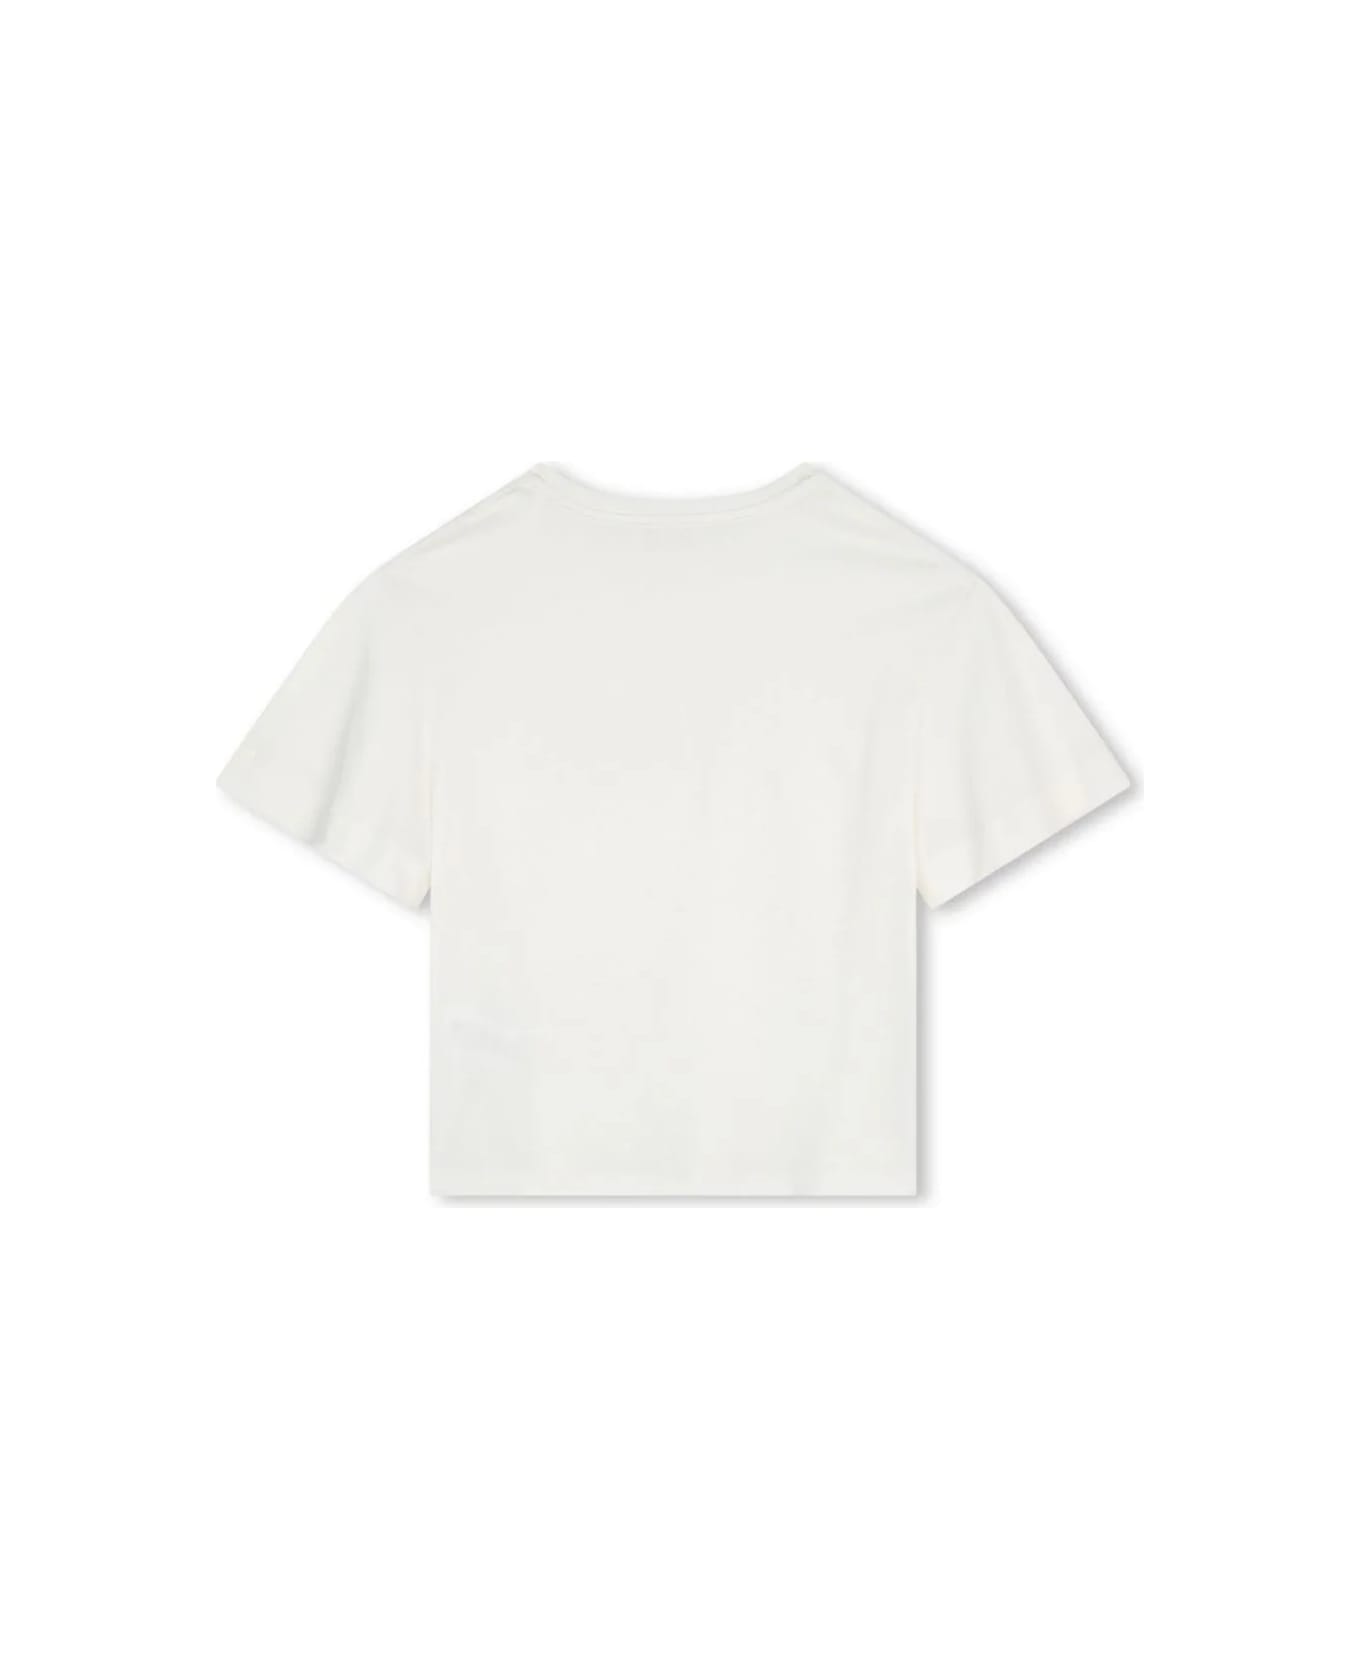 Chloé White T-shirt With Logo And Stars Print - White